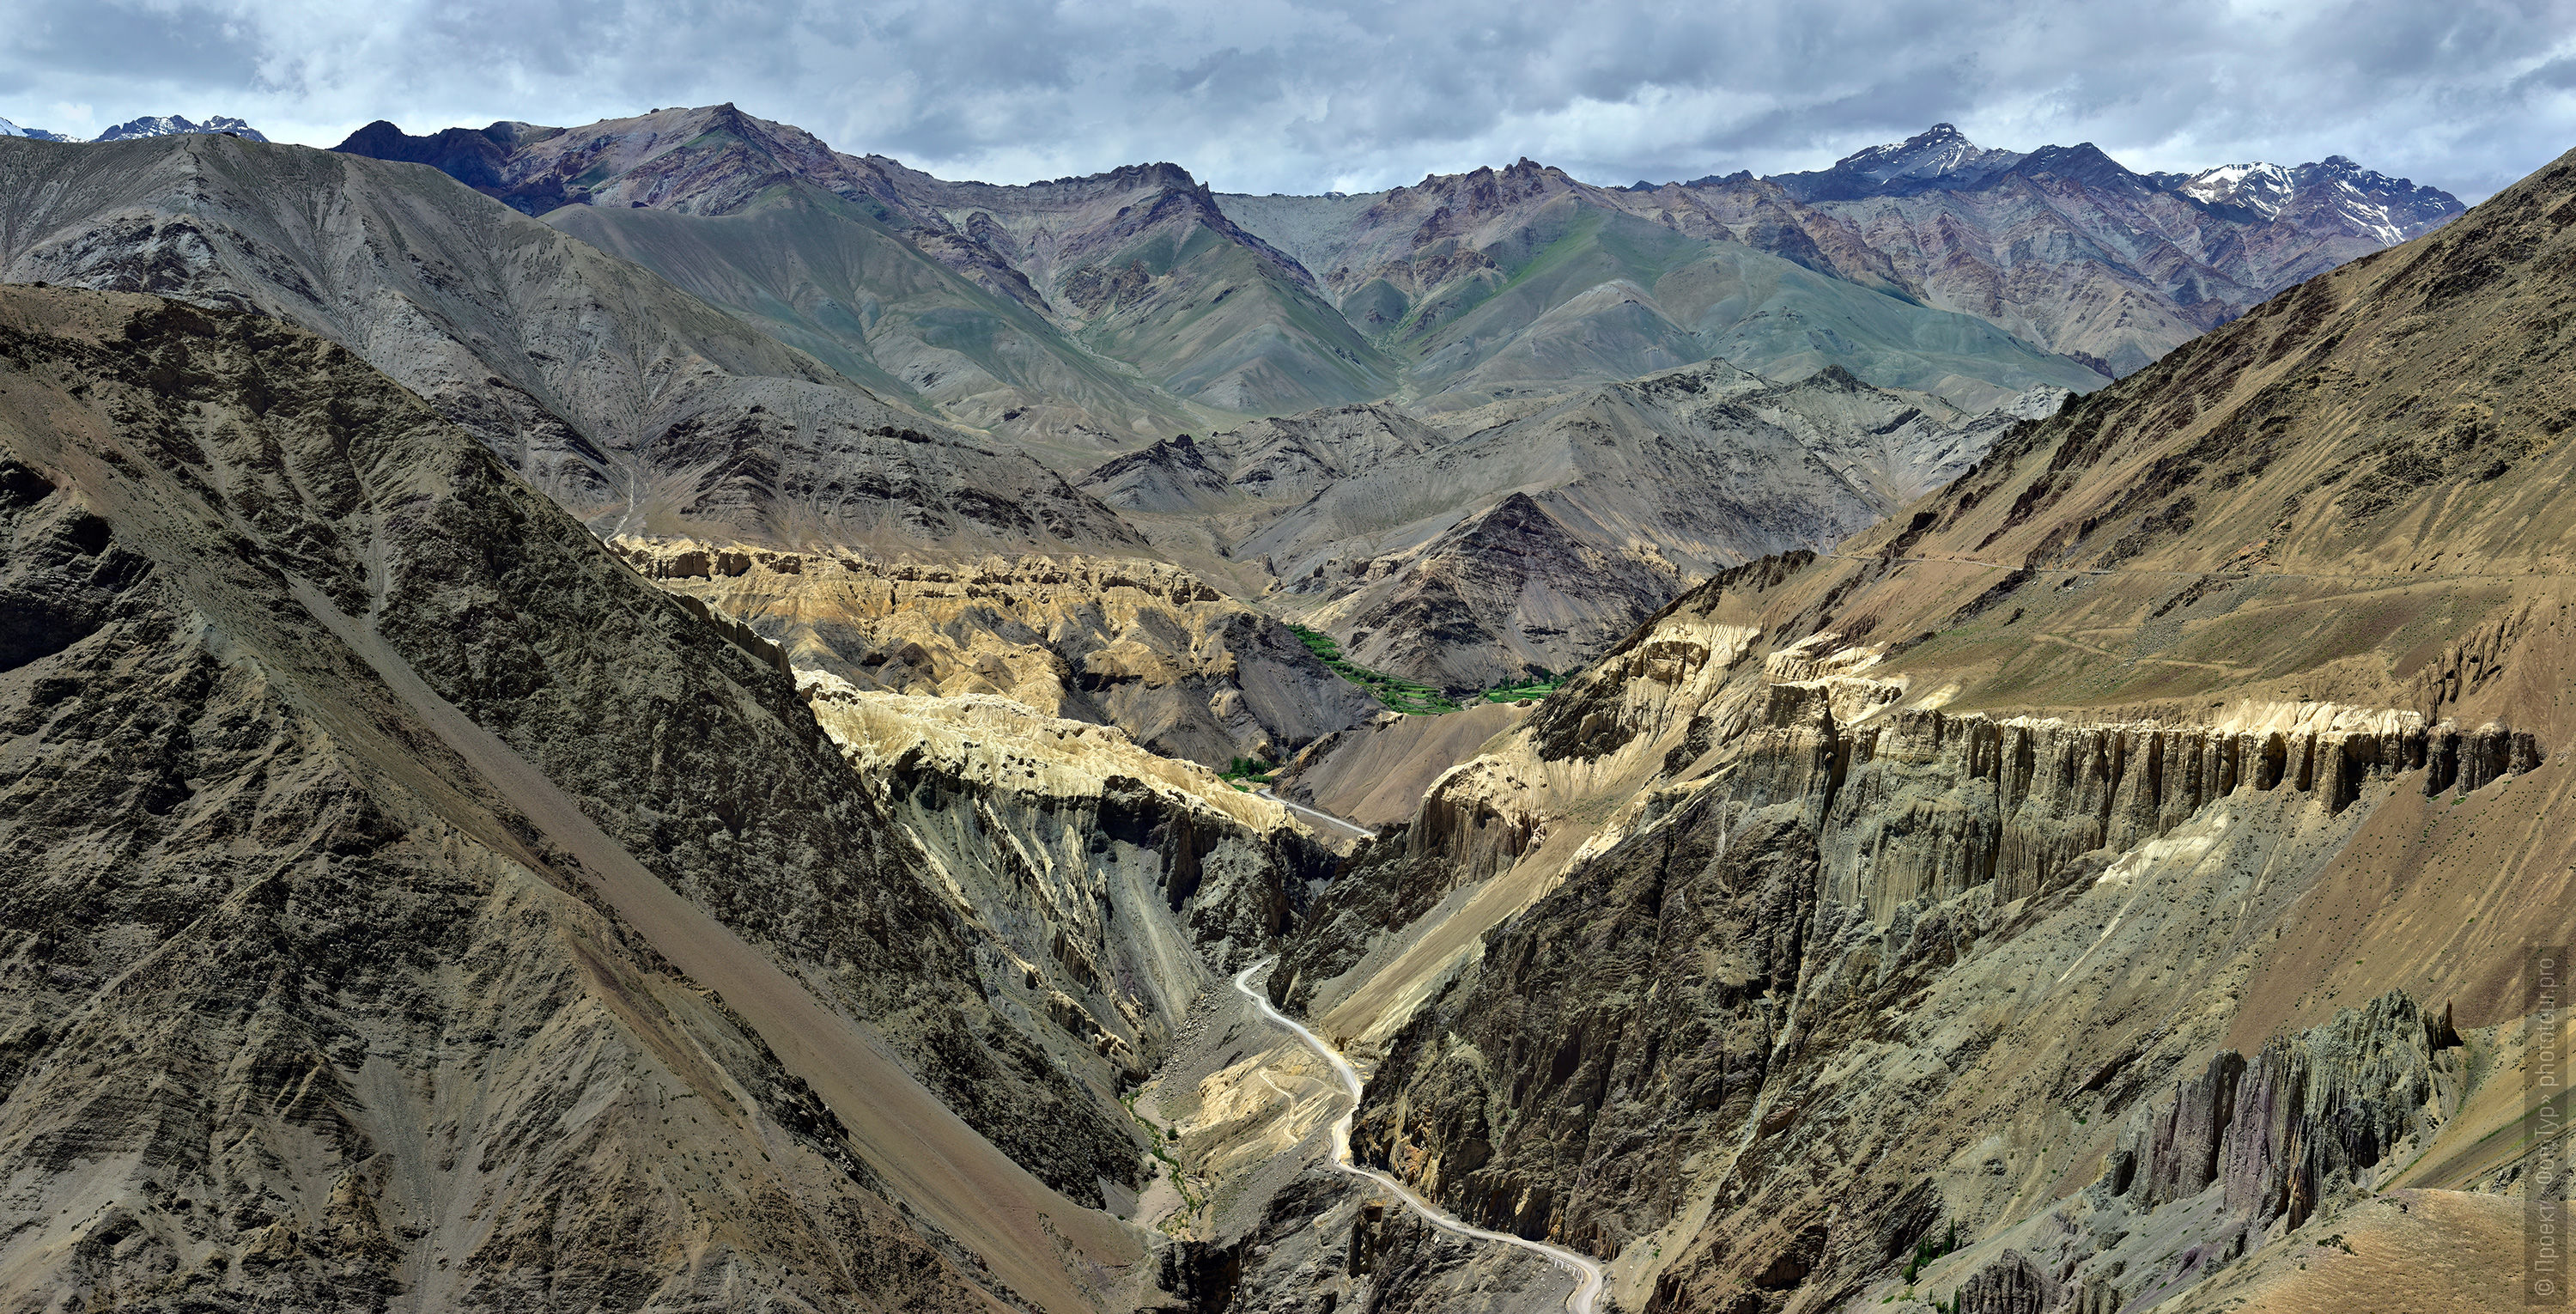 Upper mountainous army road to Lamayuru, Ladakh women’s tour, August 31 - September 14, 2019.